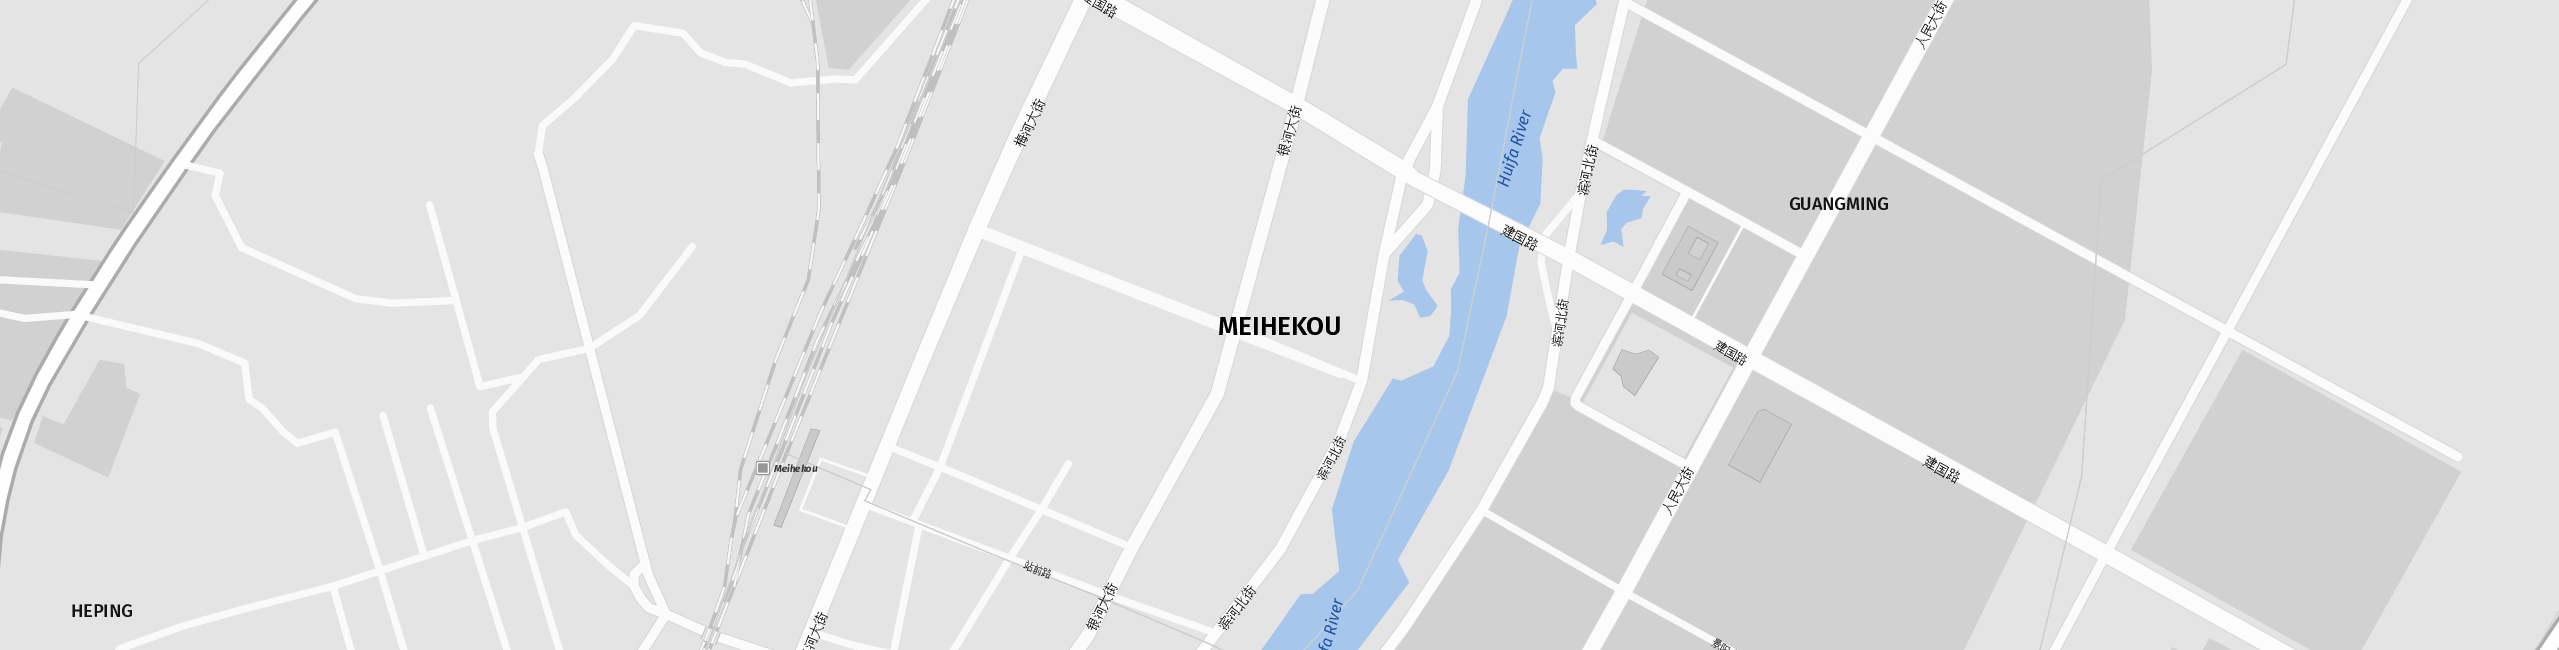 Stadtplan Meihekou zum Downloaden.